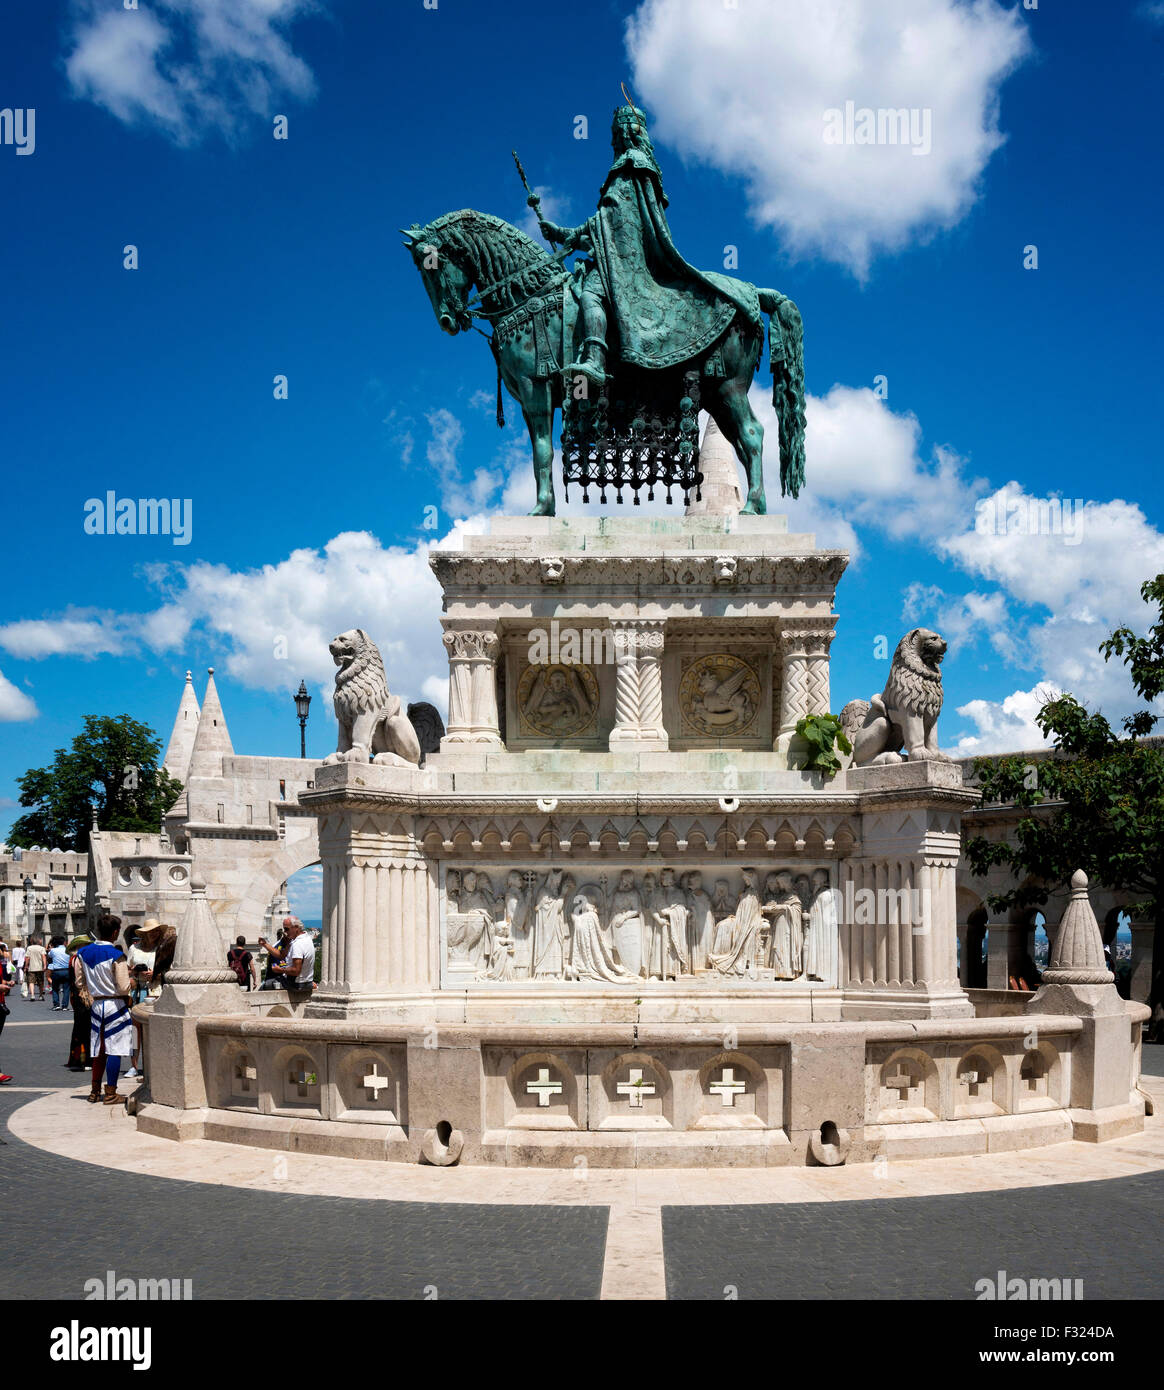 Statue of Saint Istvan, Fisherman's Bastion, castle Hill, Budapest, Hungary Stock Photo